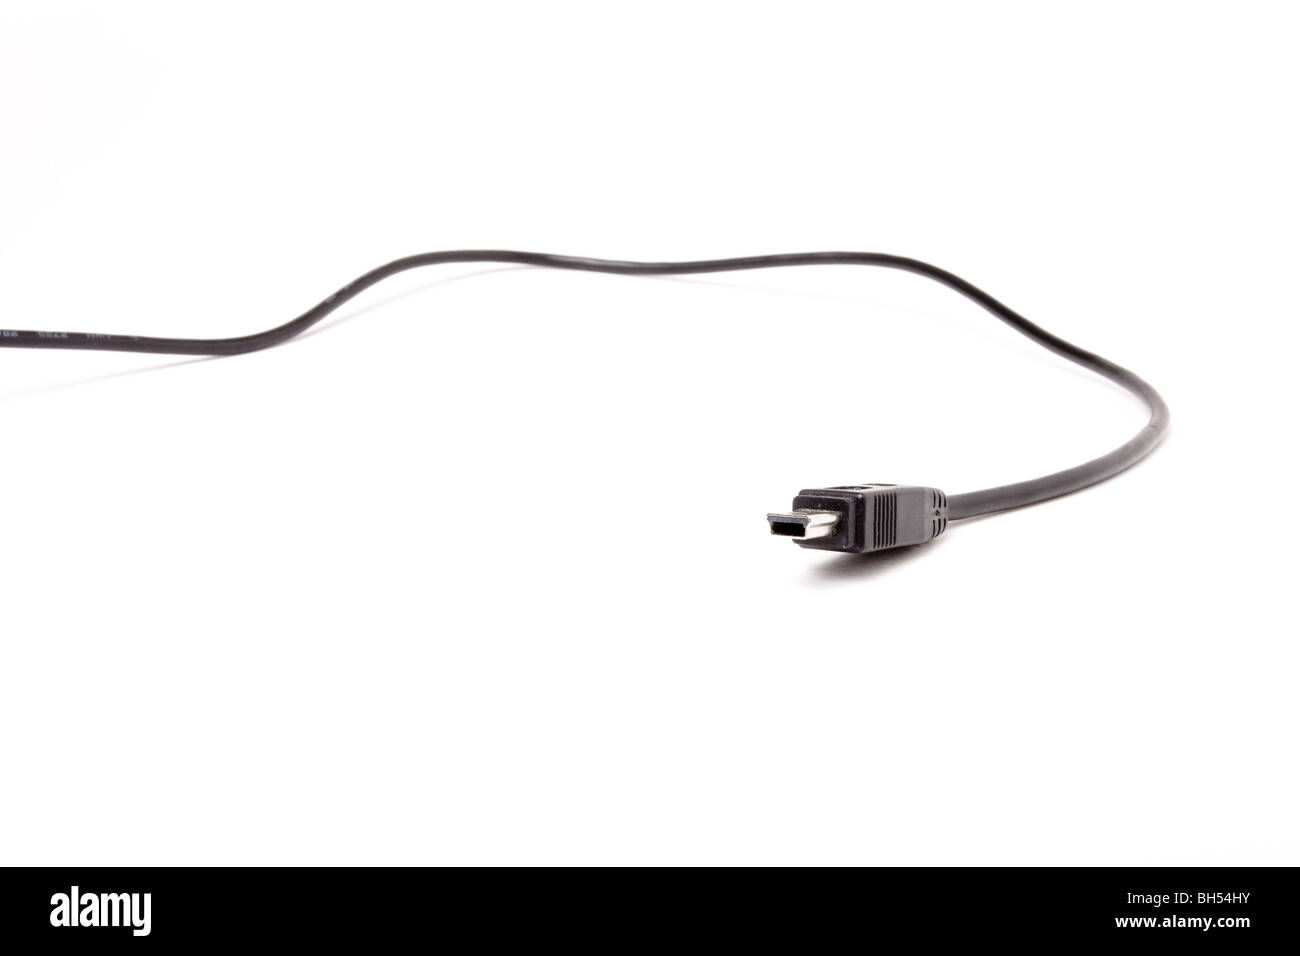 Black Mini USB Cable close up isolated against white background. Stock Photo